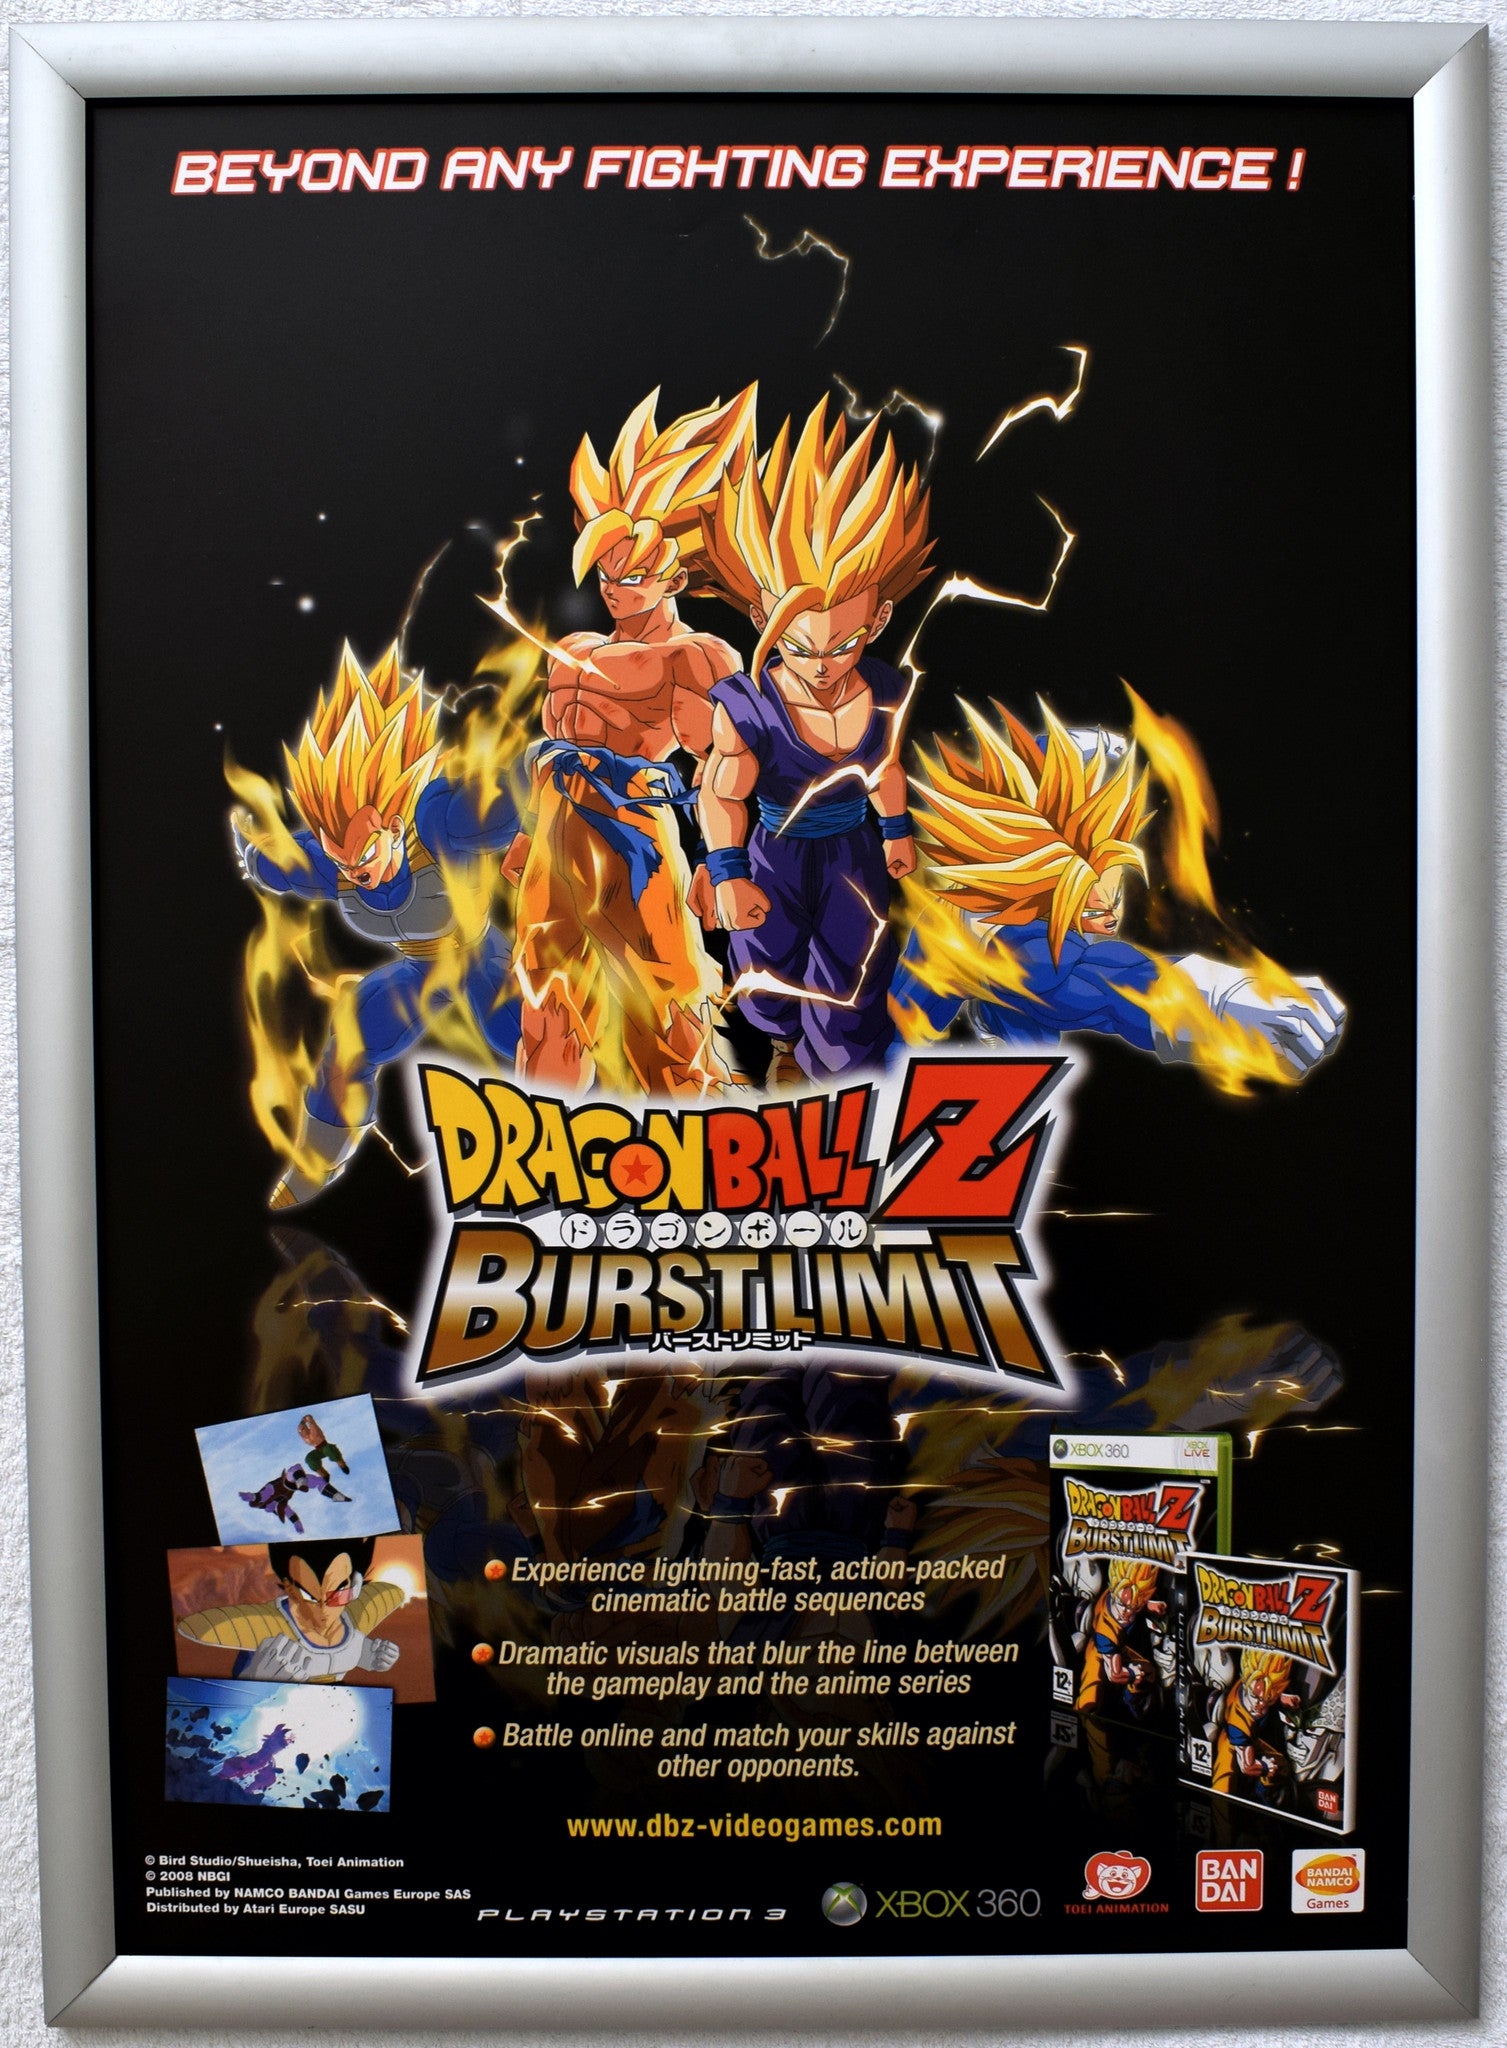 Dragonball Z Burst Limit (A2) Promotional Poster